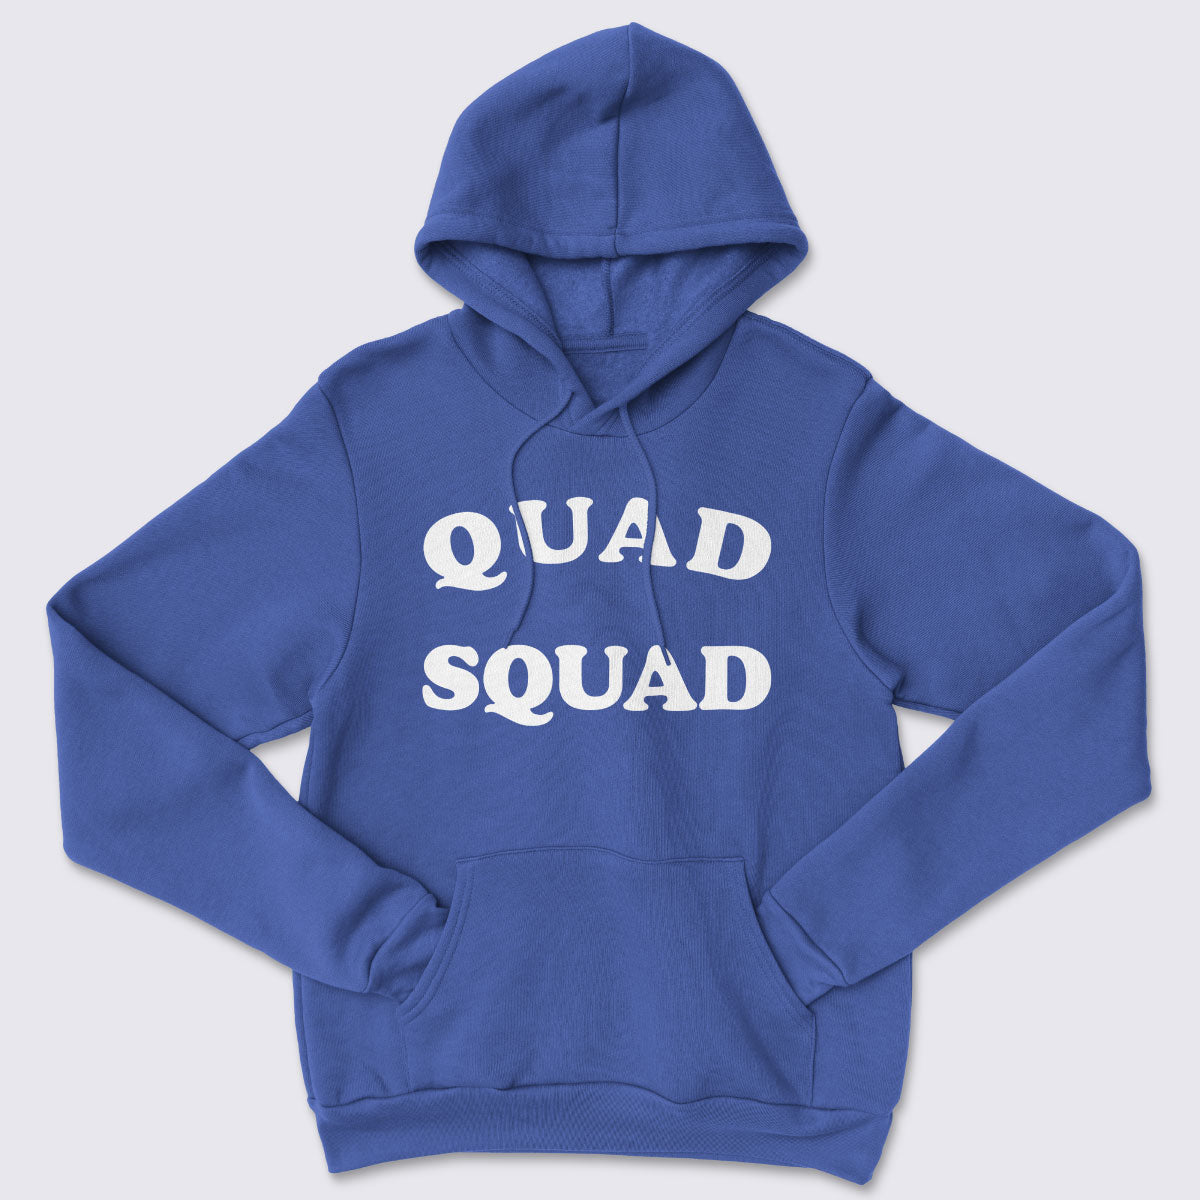 Quad Squad Core Fleece Pullover Hooded Sweatshirt